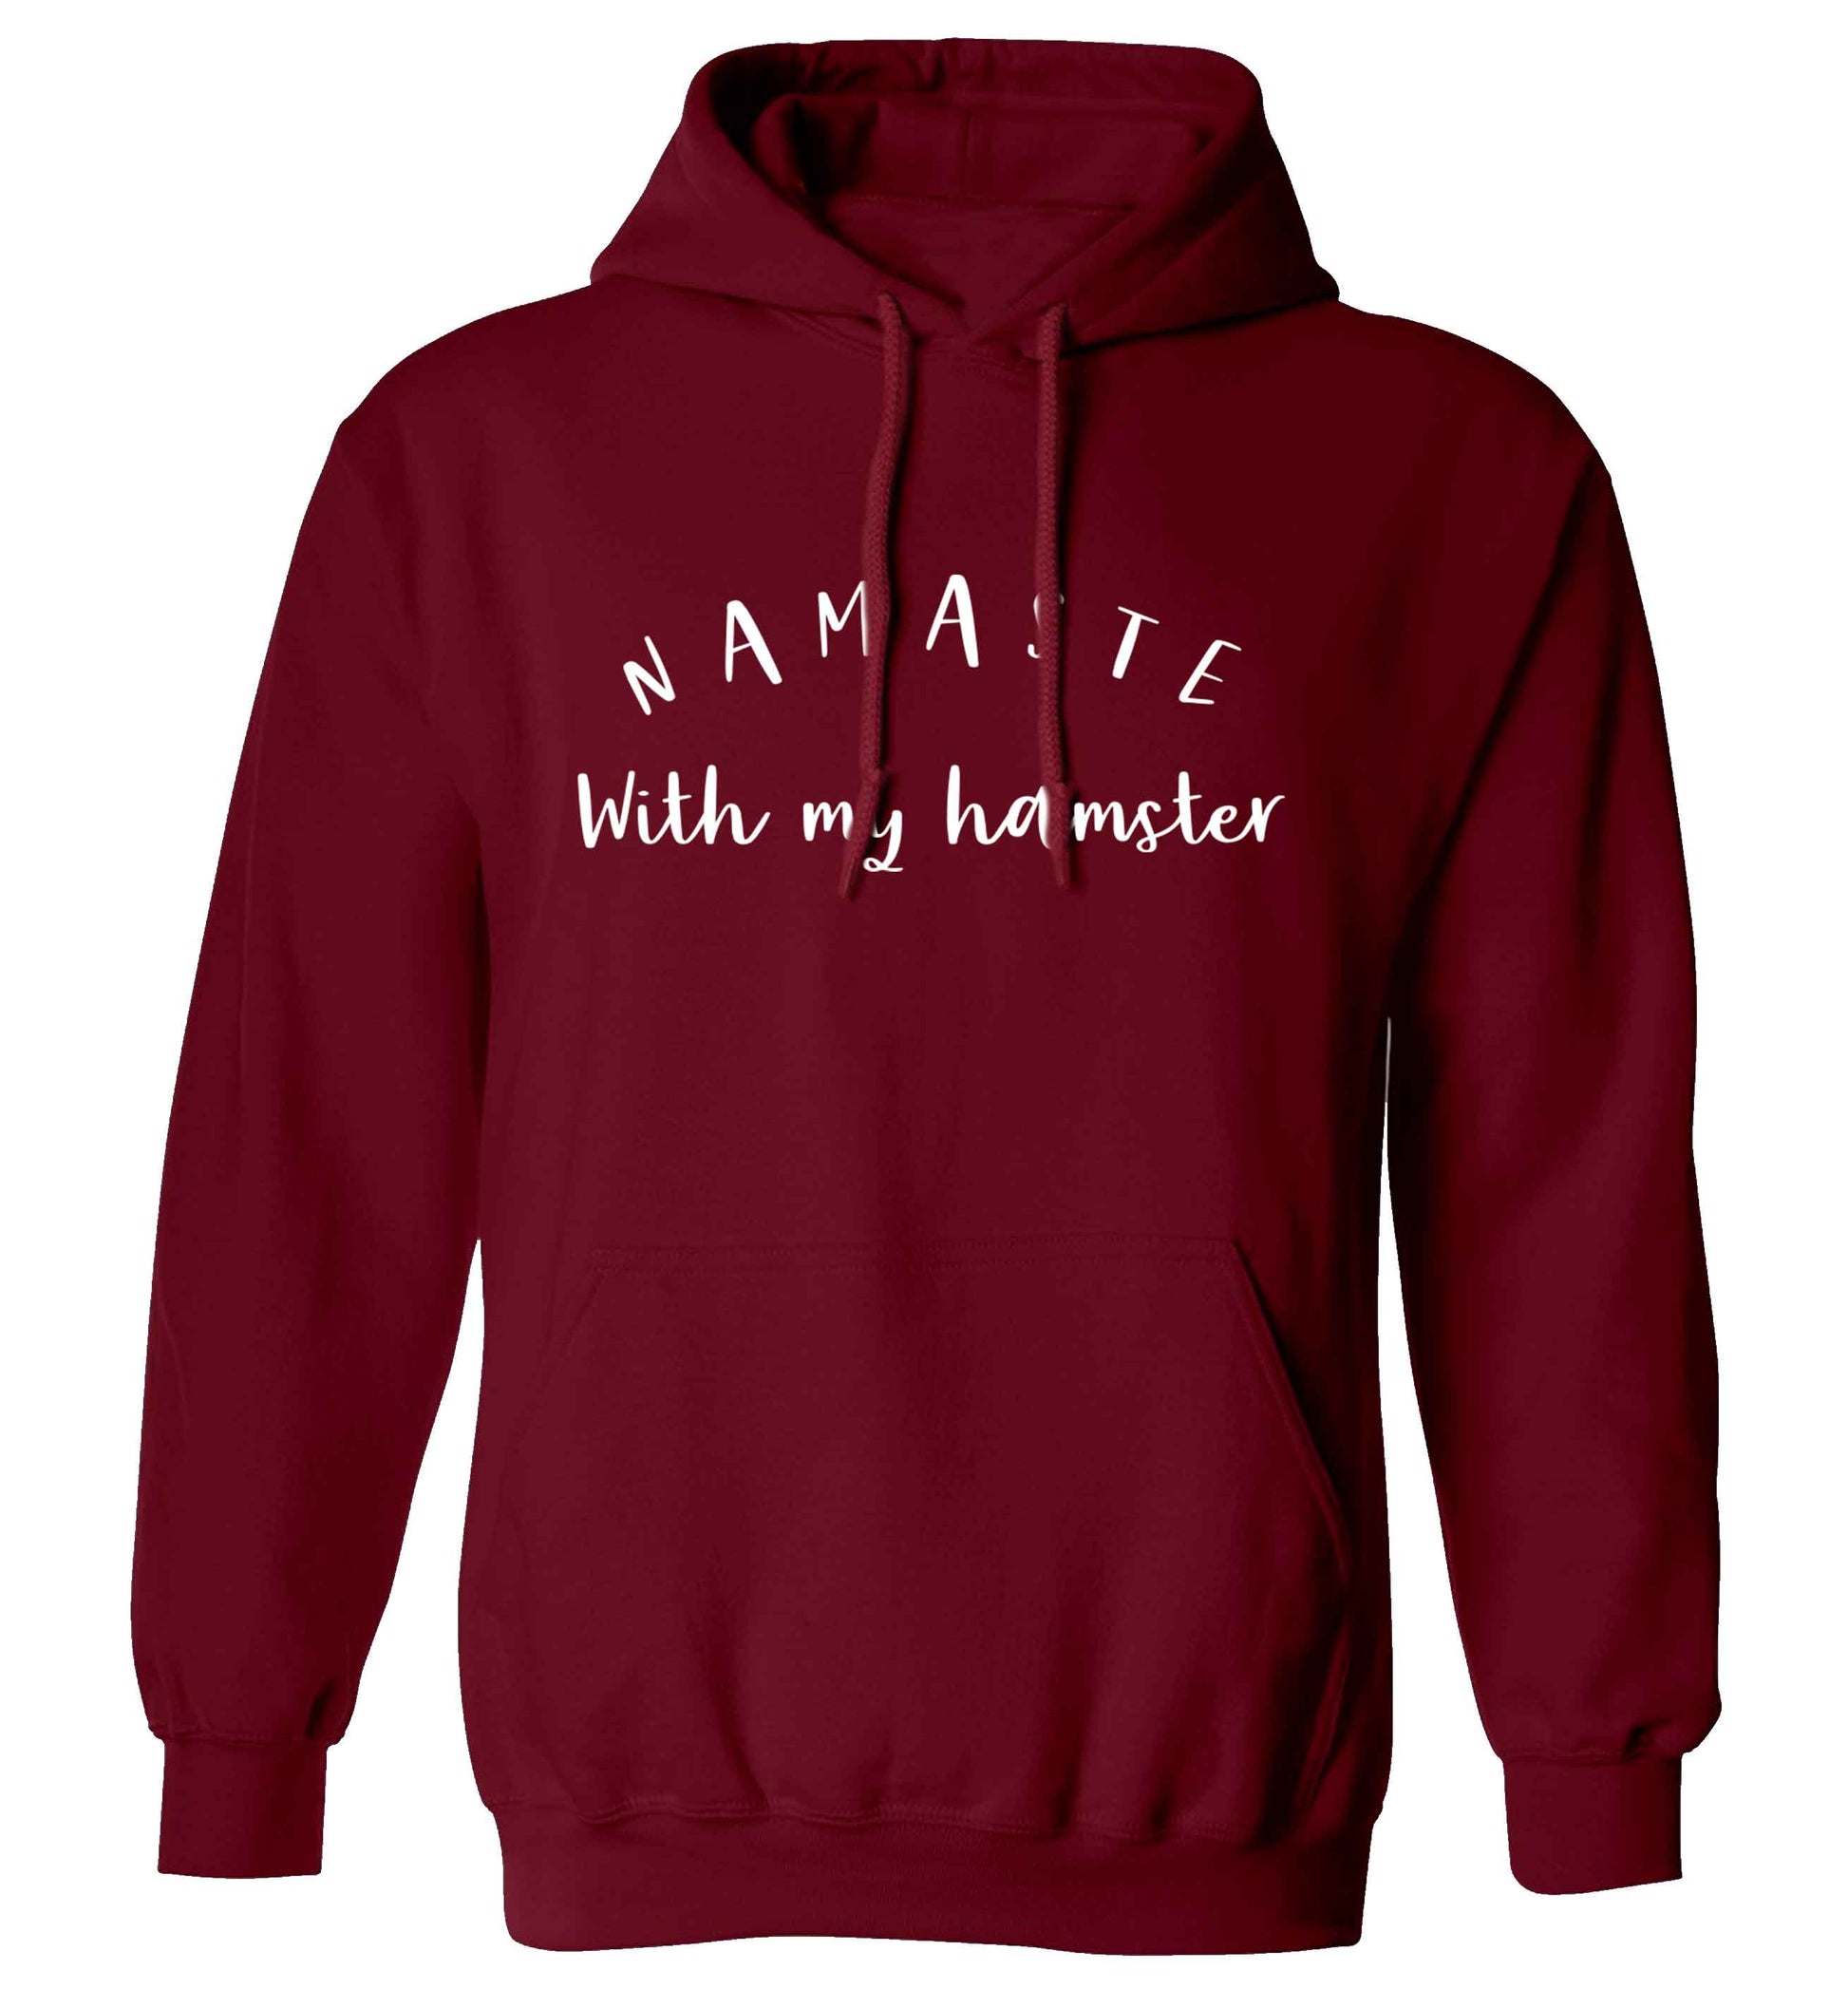 Namaste with my hamster adults unisex maroon hoodie 2XL